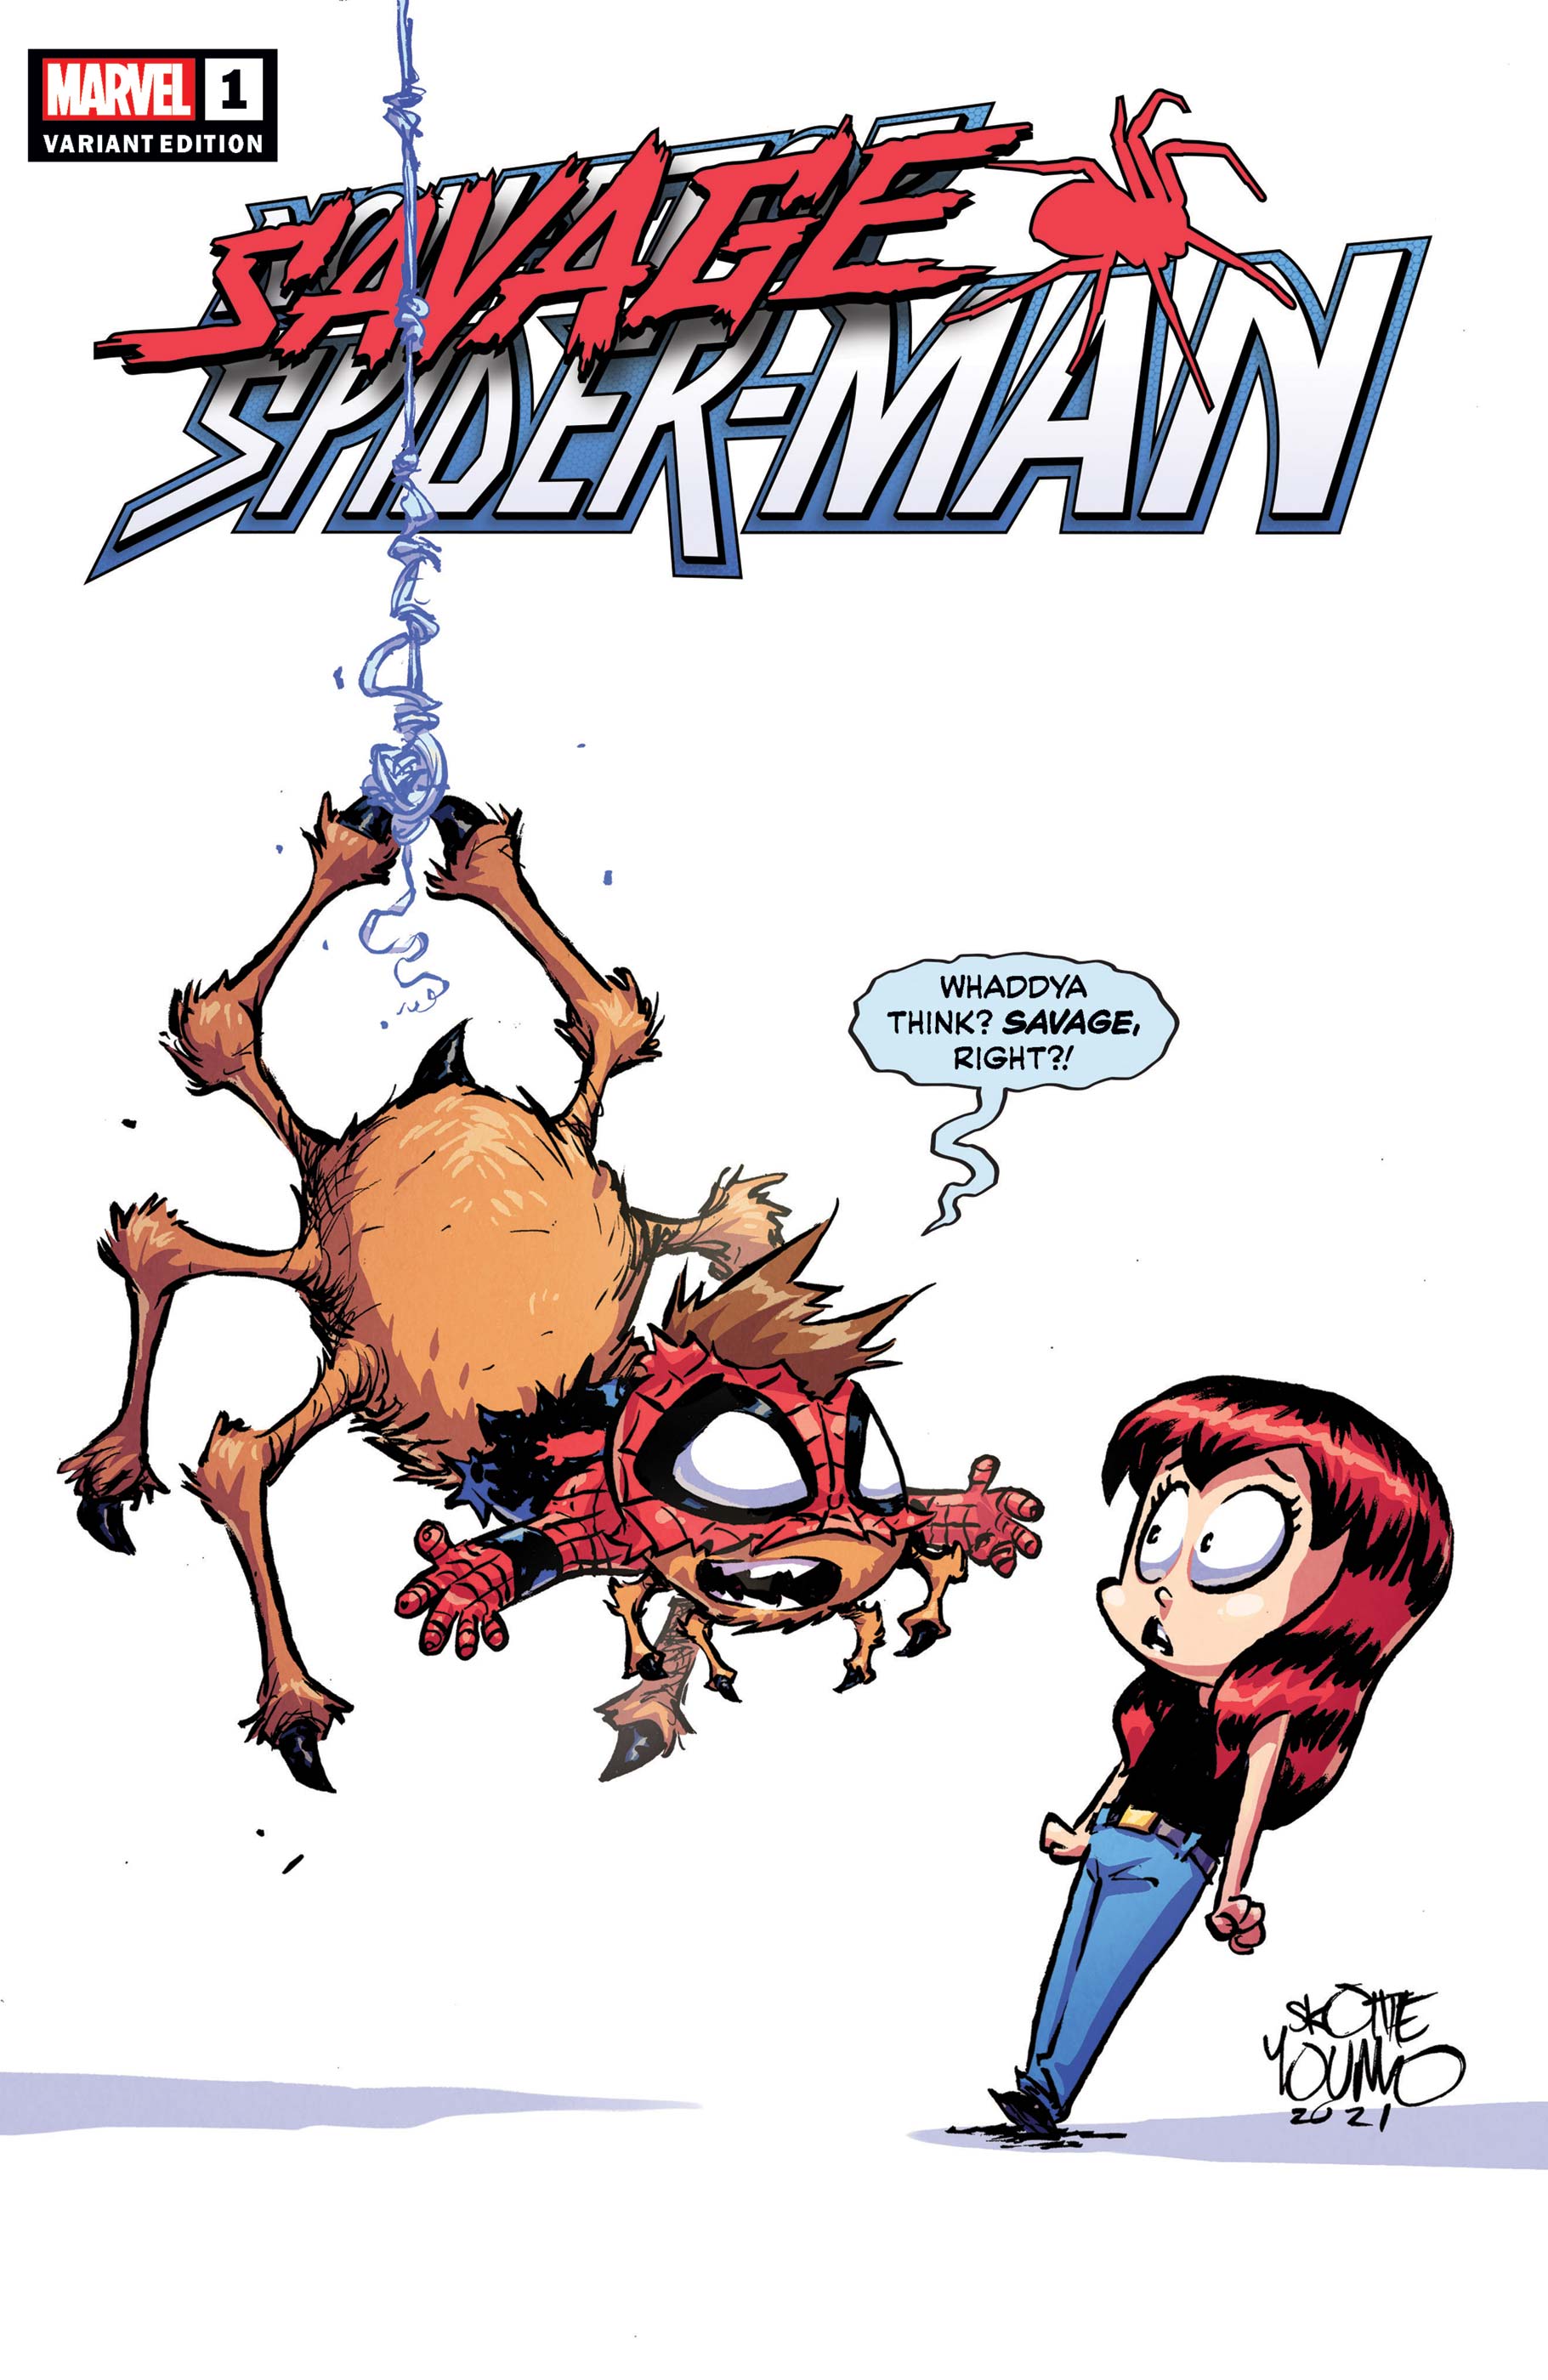 Savage Spider-Man (2022) #1 (Variant)